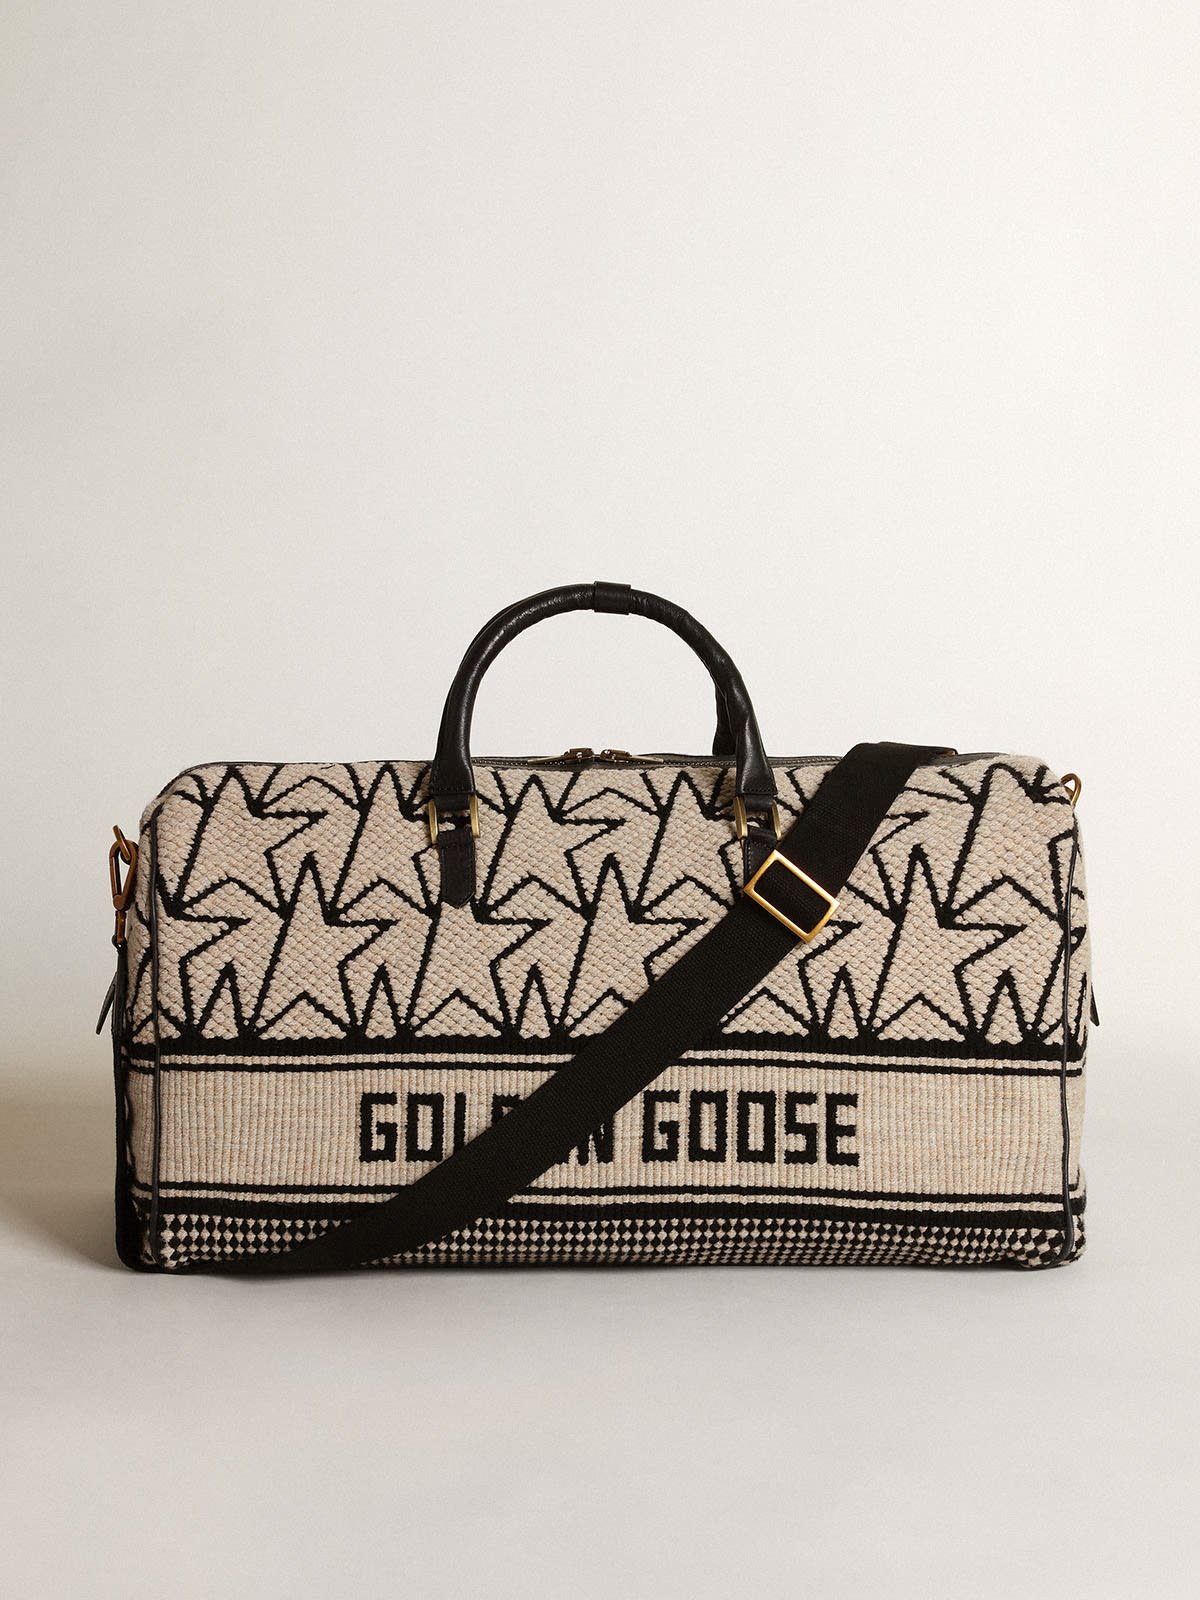 Golden Goose - Men's duffle bag in milk-white jacquard wool and black lettering in 